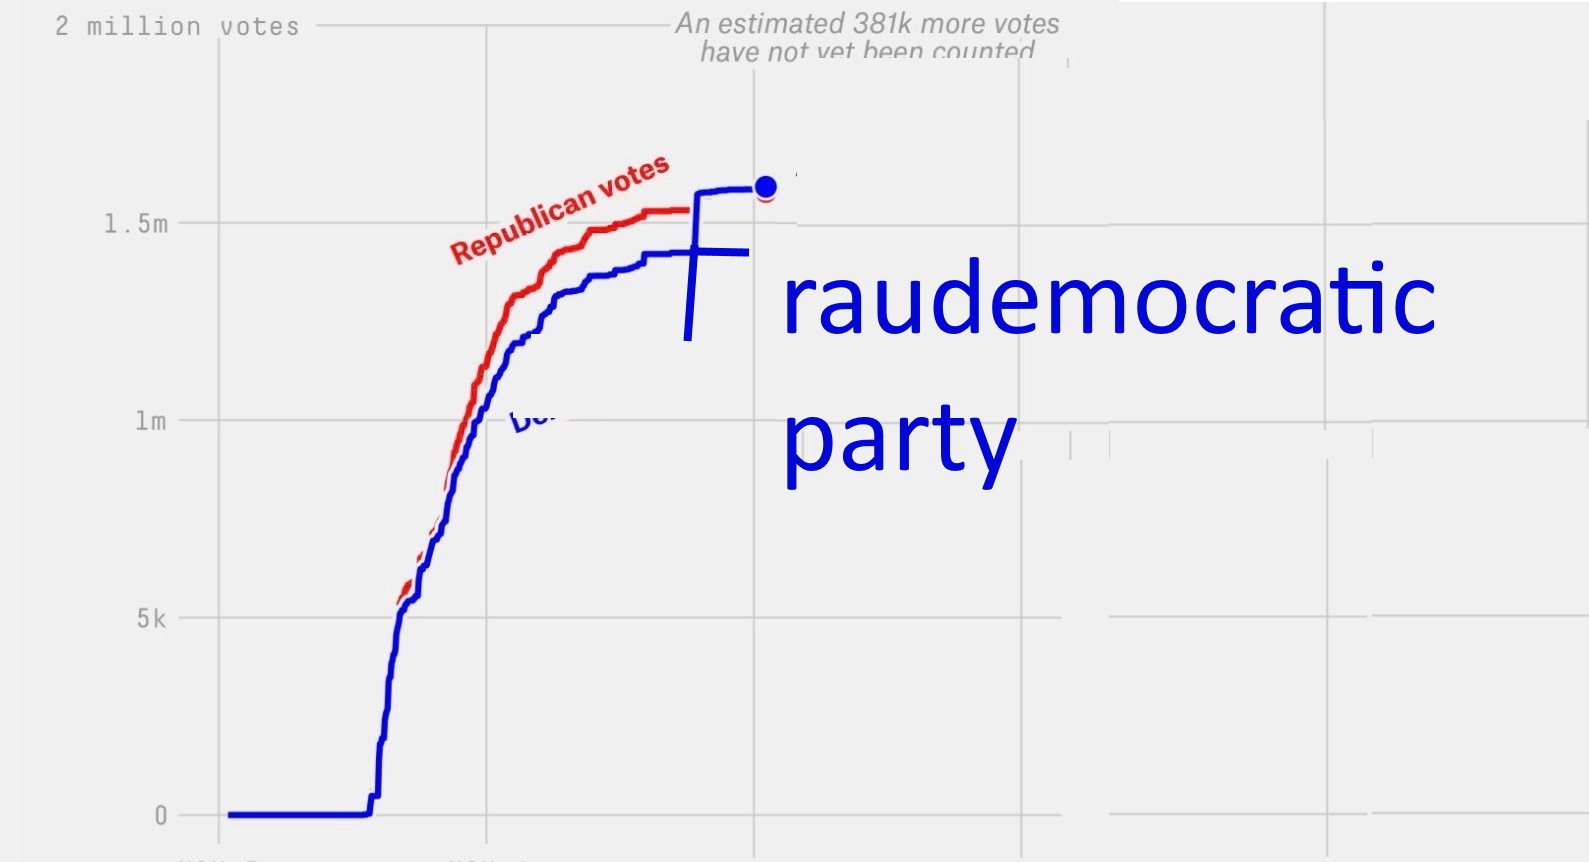 Fraudemocratic party